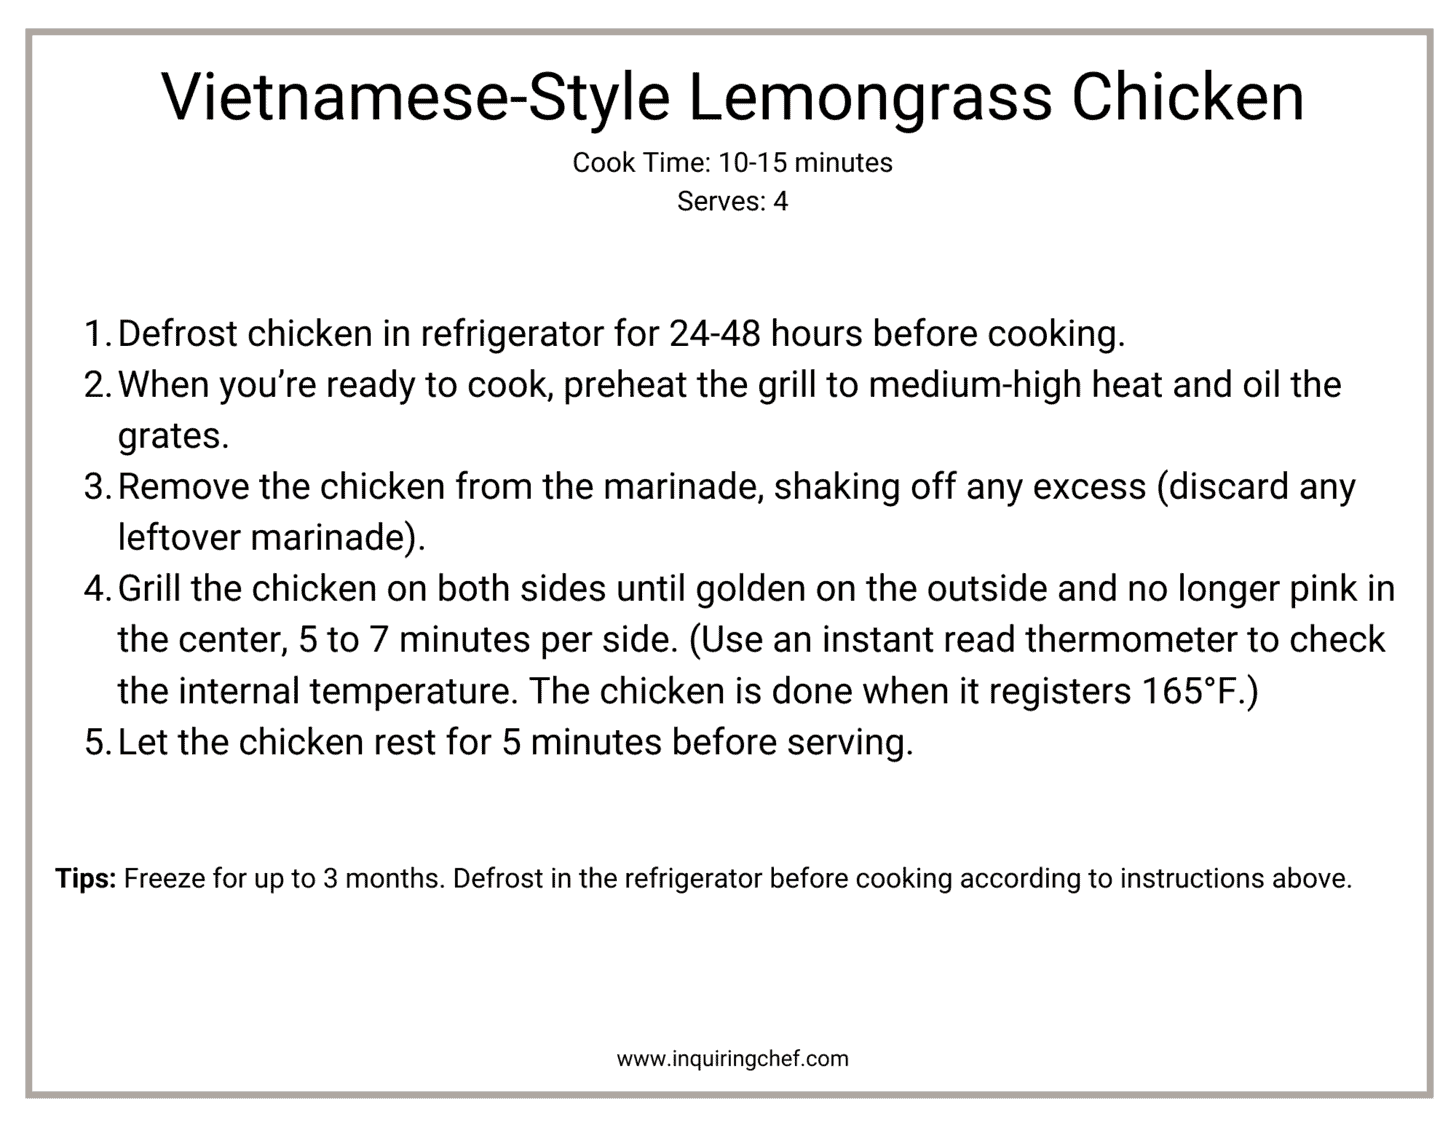 lemongrass chicken freezer label